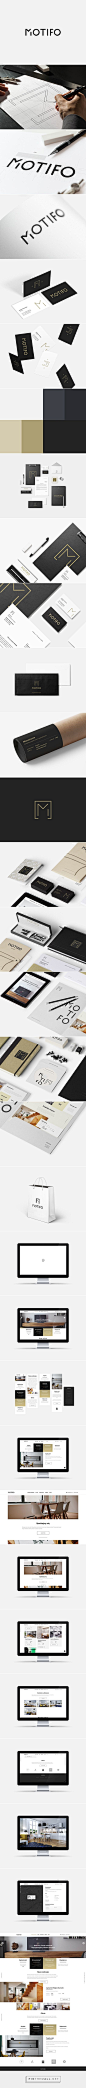 MOTIFO  - 室内设计建筑师|  品牌与网站上Behance的...  - 一个分组的图像画面 - 针把他们都：